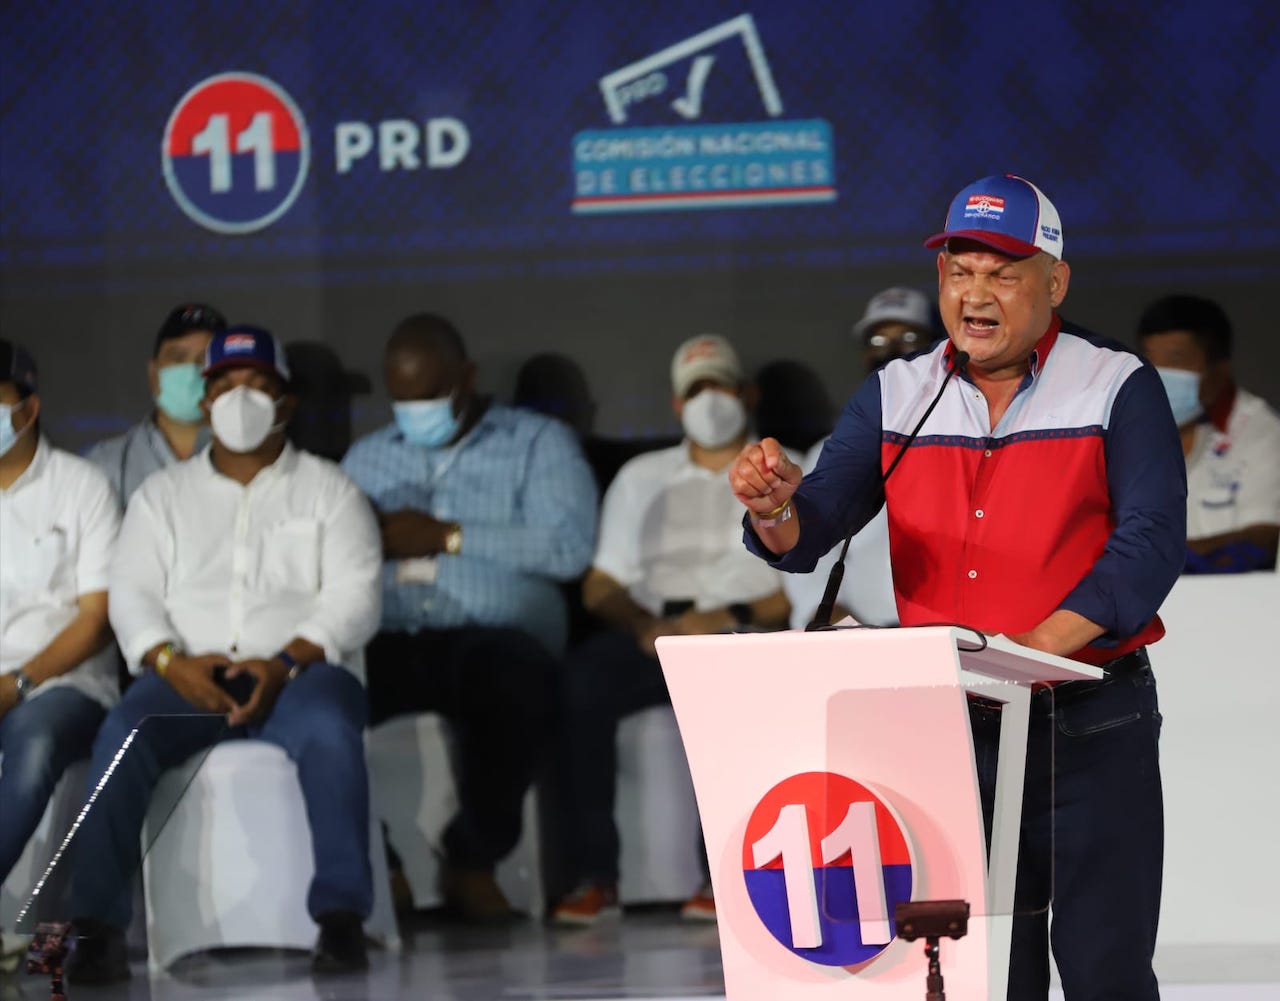 Benicio Robinson retuvo la presidencia del PRD con 2,716 votos